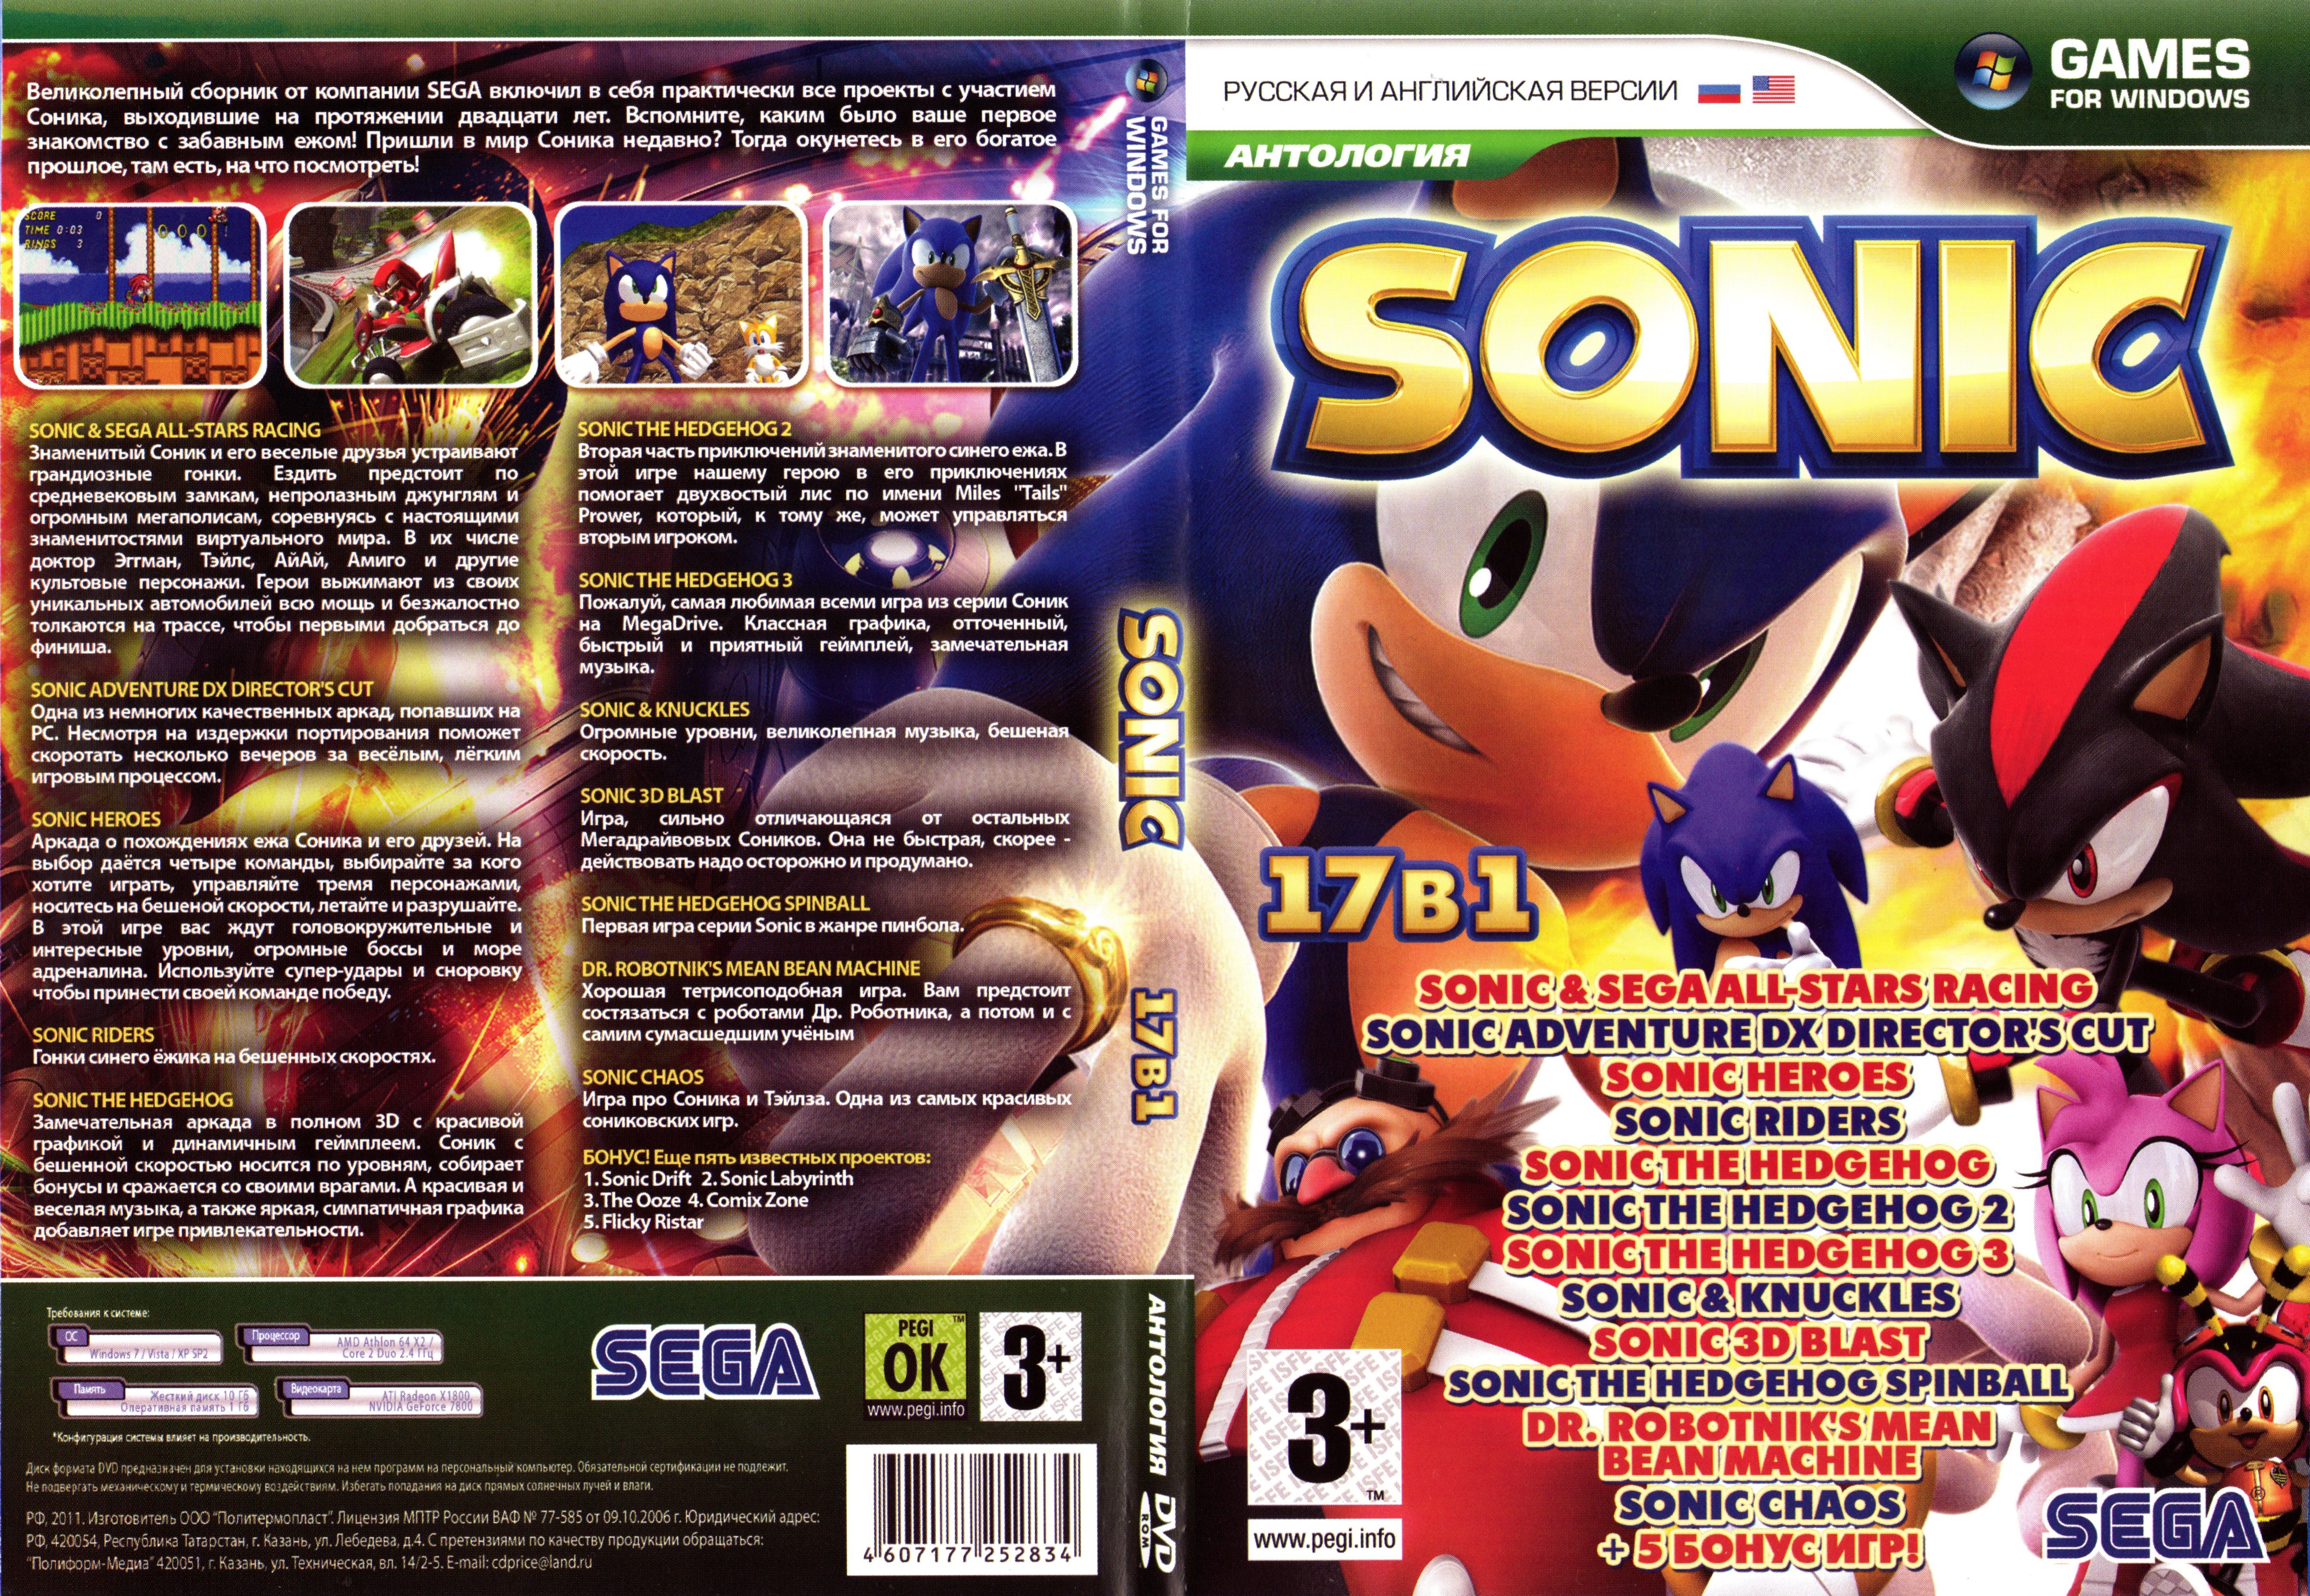 Sonic tab. Sonic РС игры DVD диск. Антология игр диск Sonic. Диск для игры Соник. Антология игр про Соника.